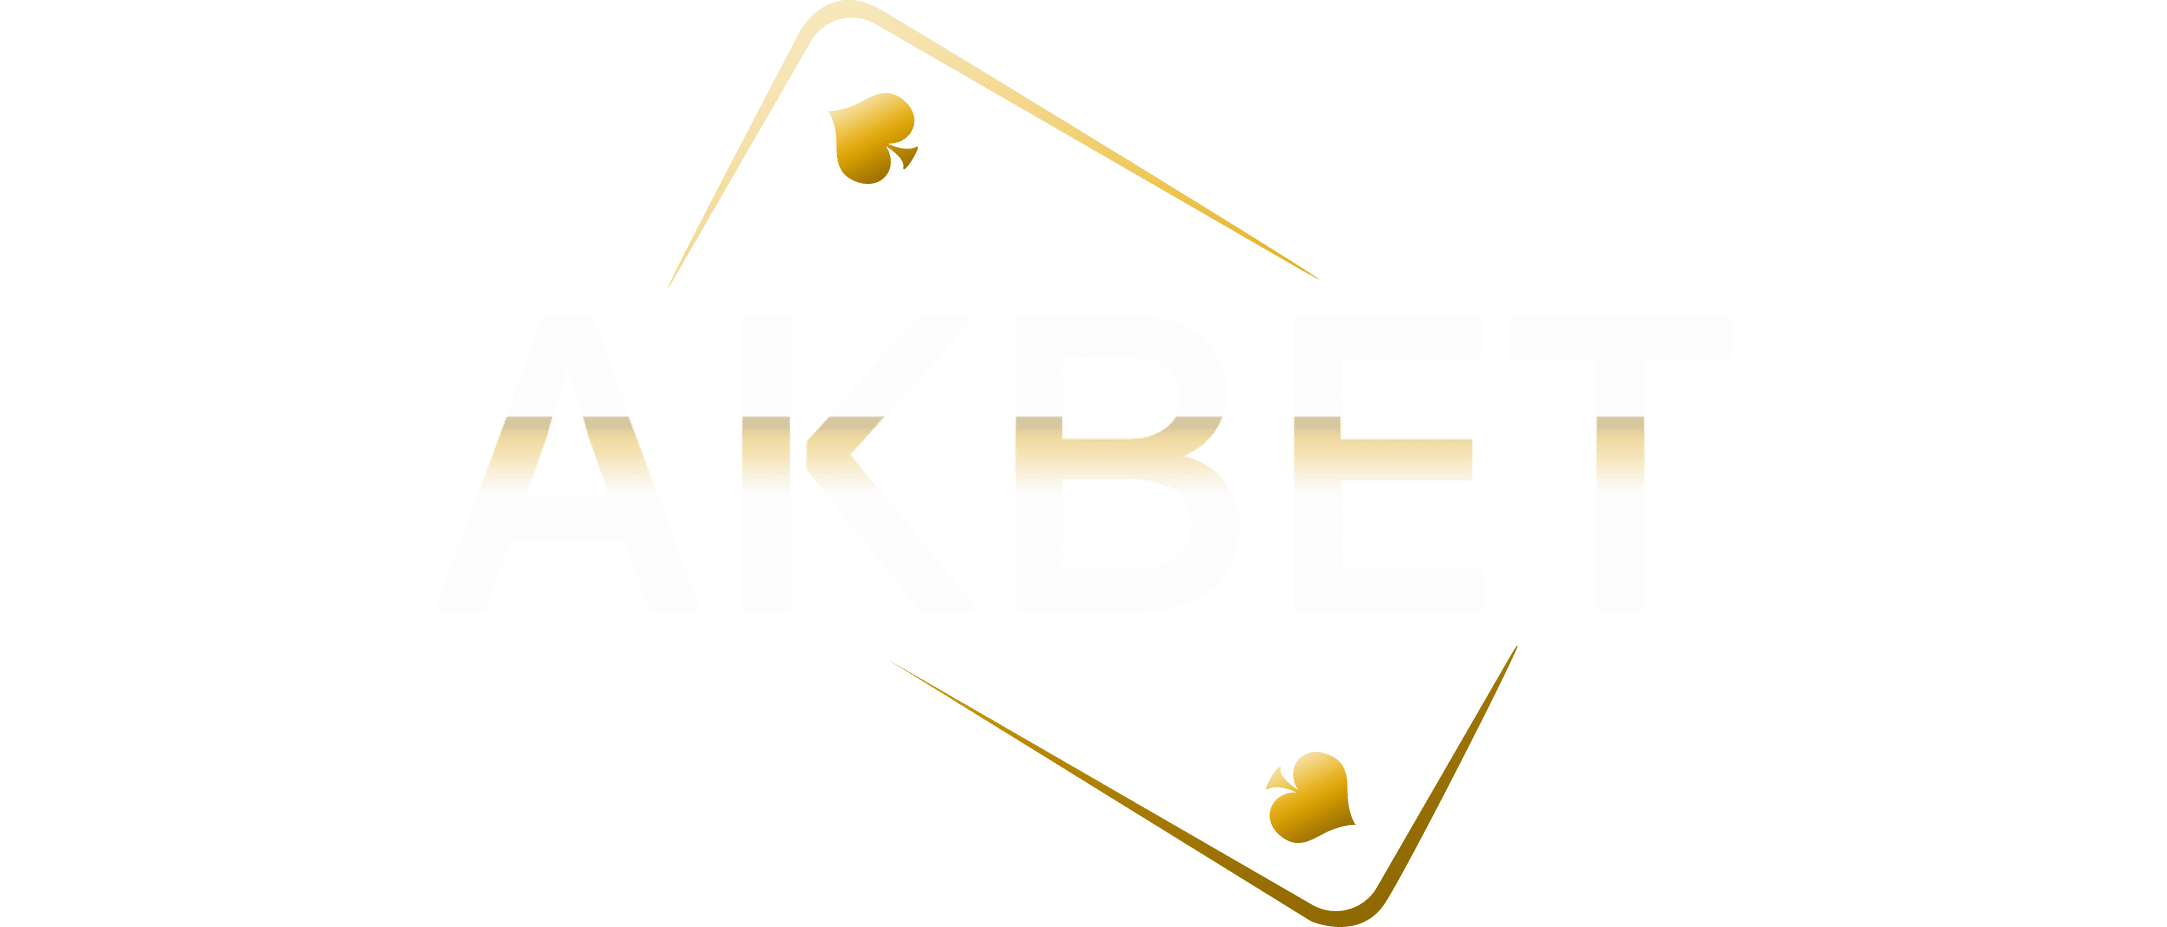 AKBET logo